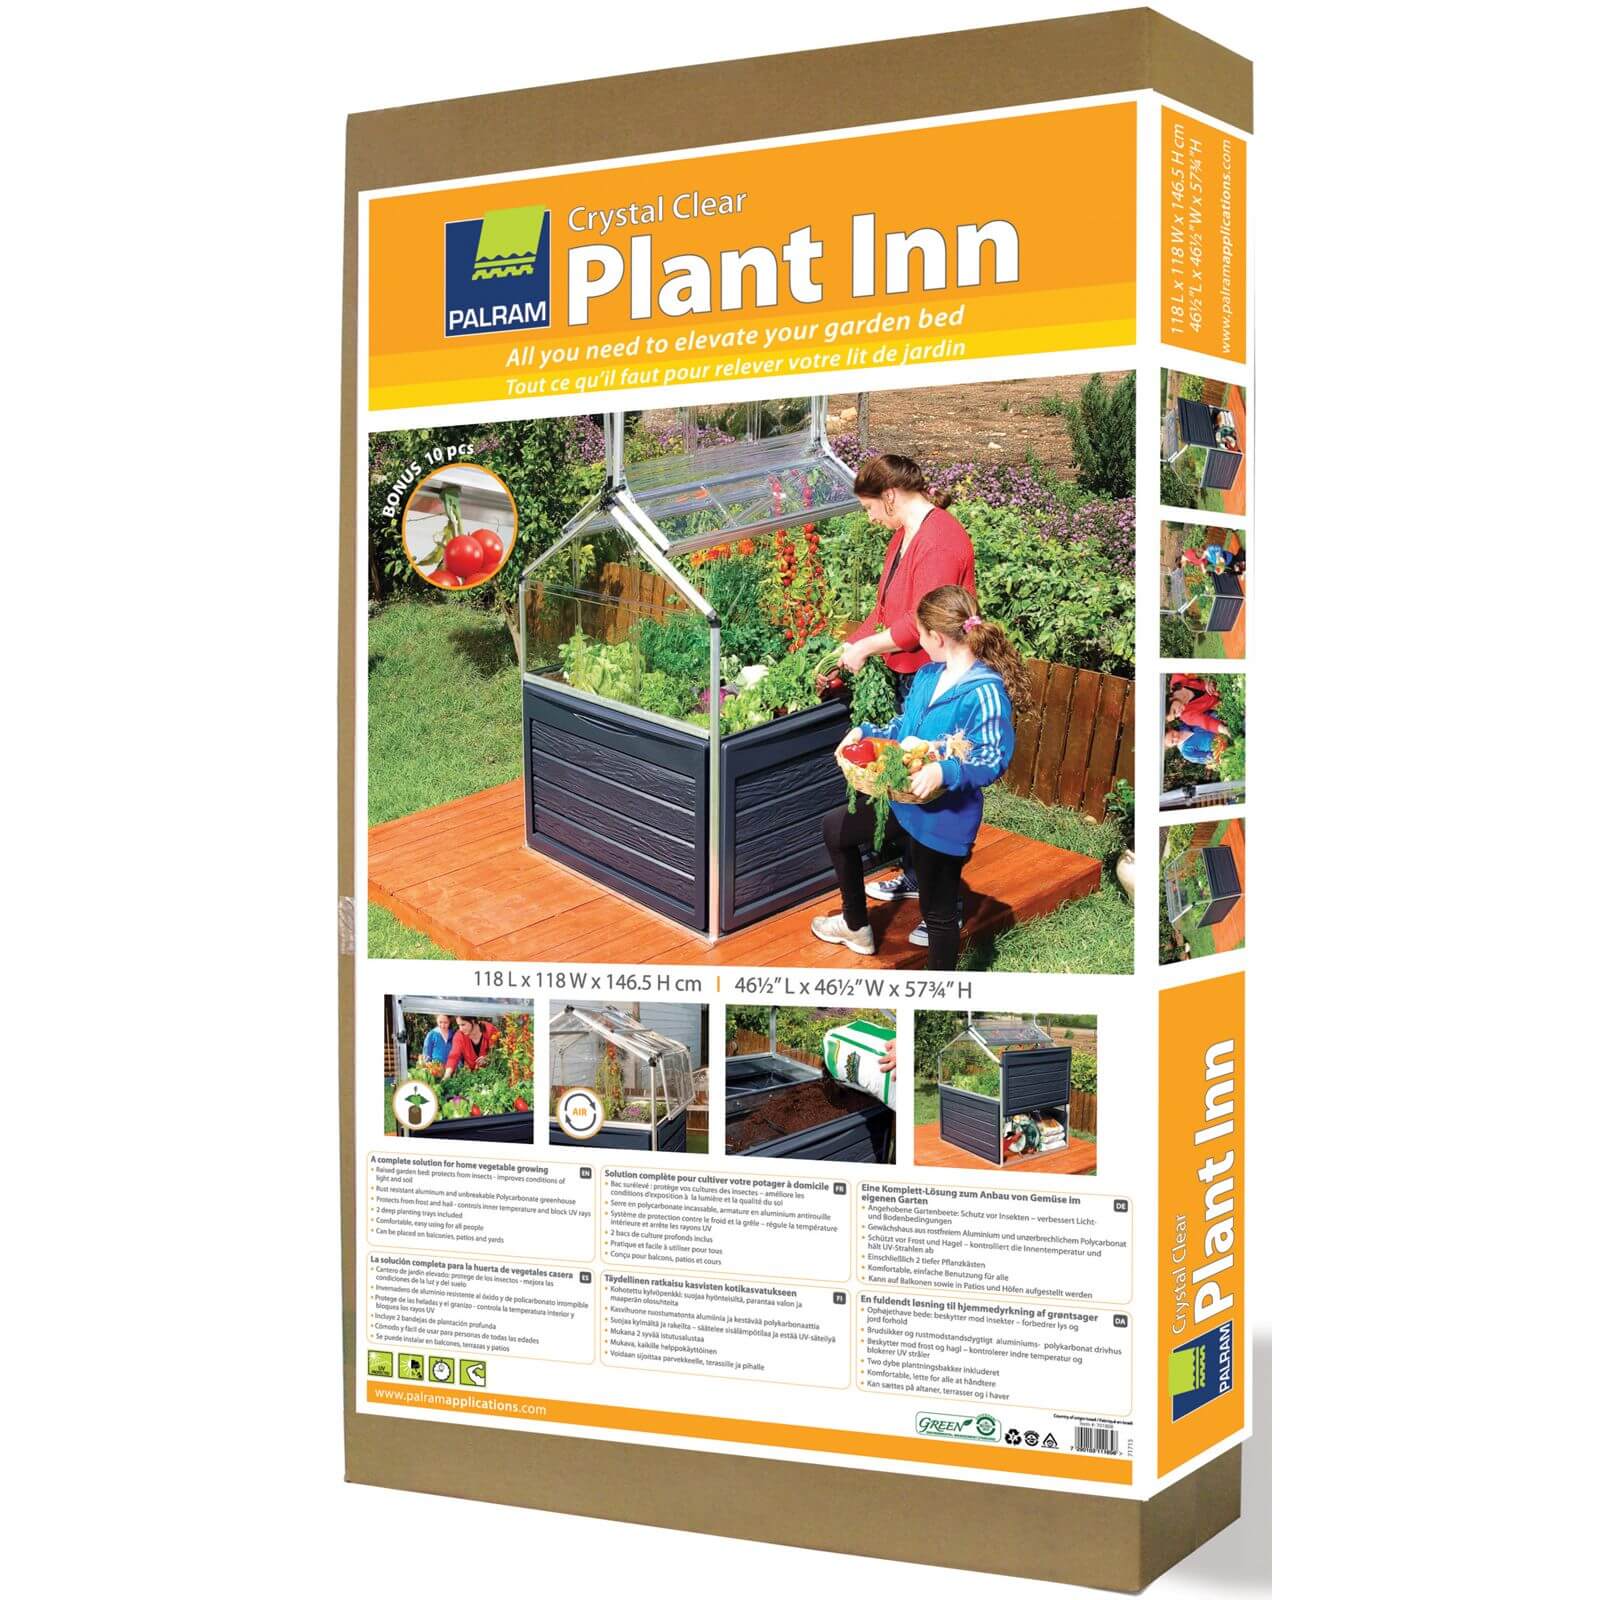 Palram Plant Inn Mini Greenhouse